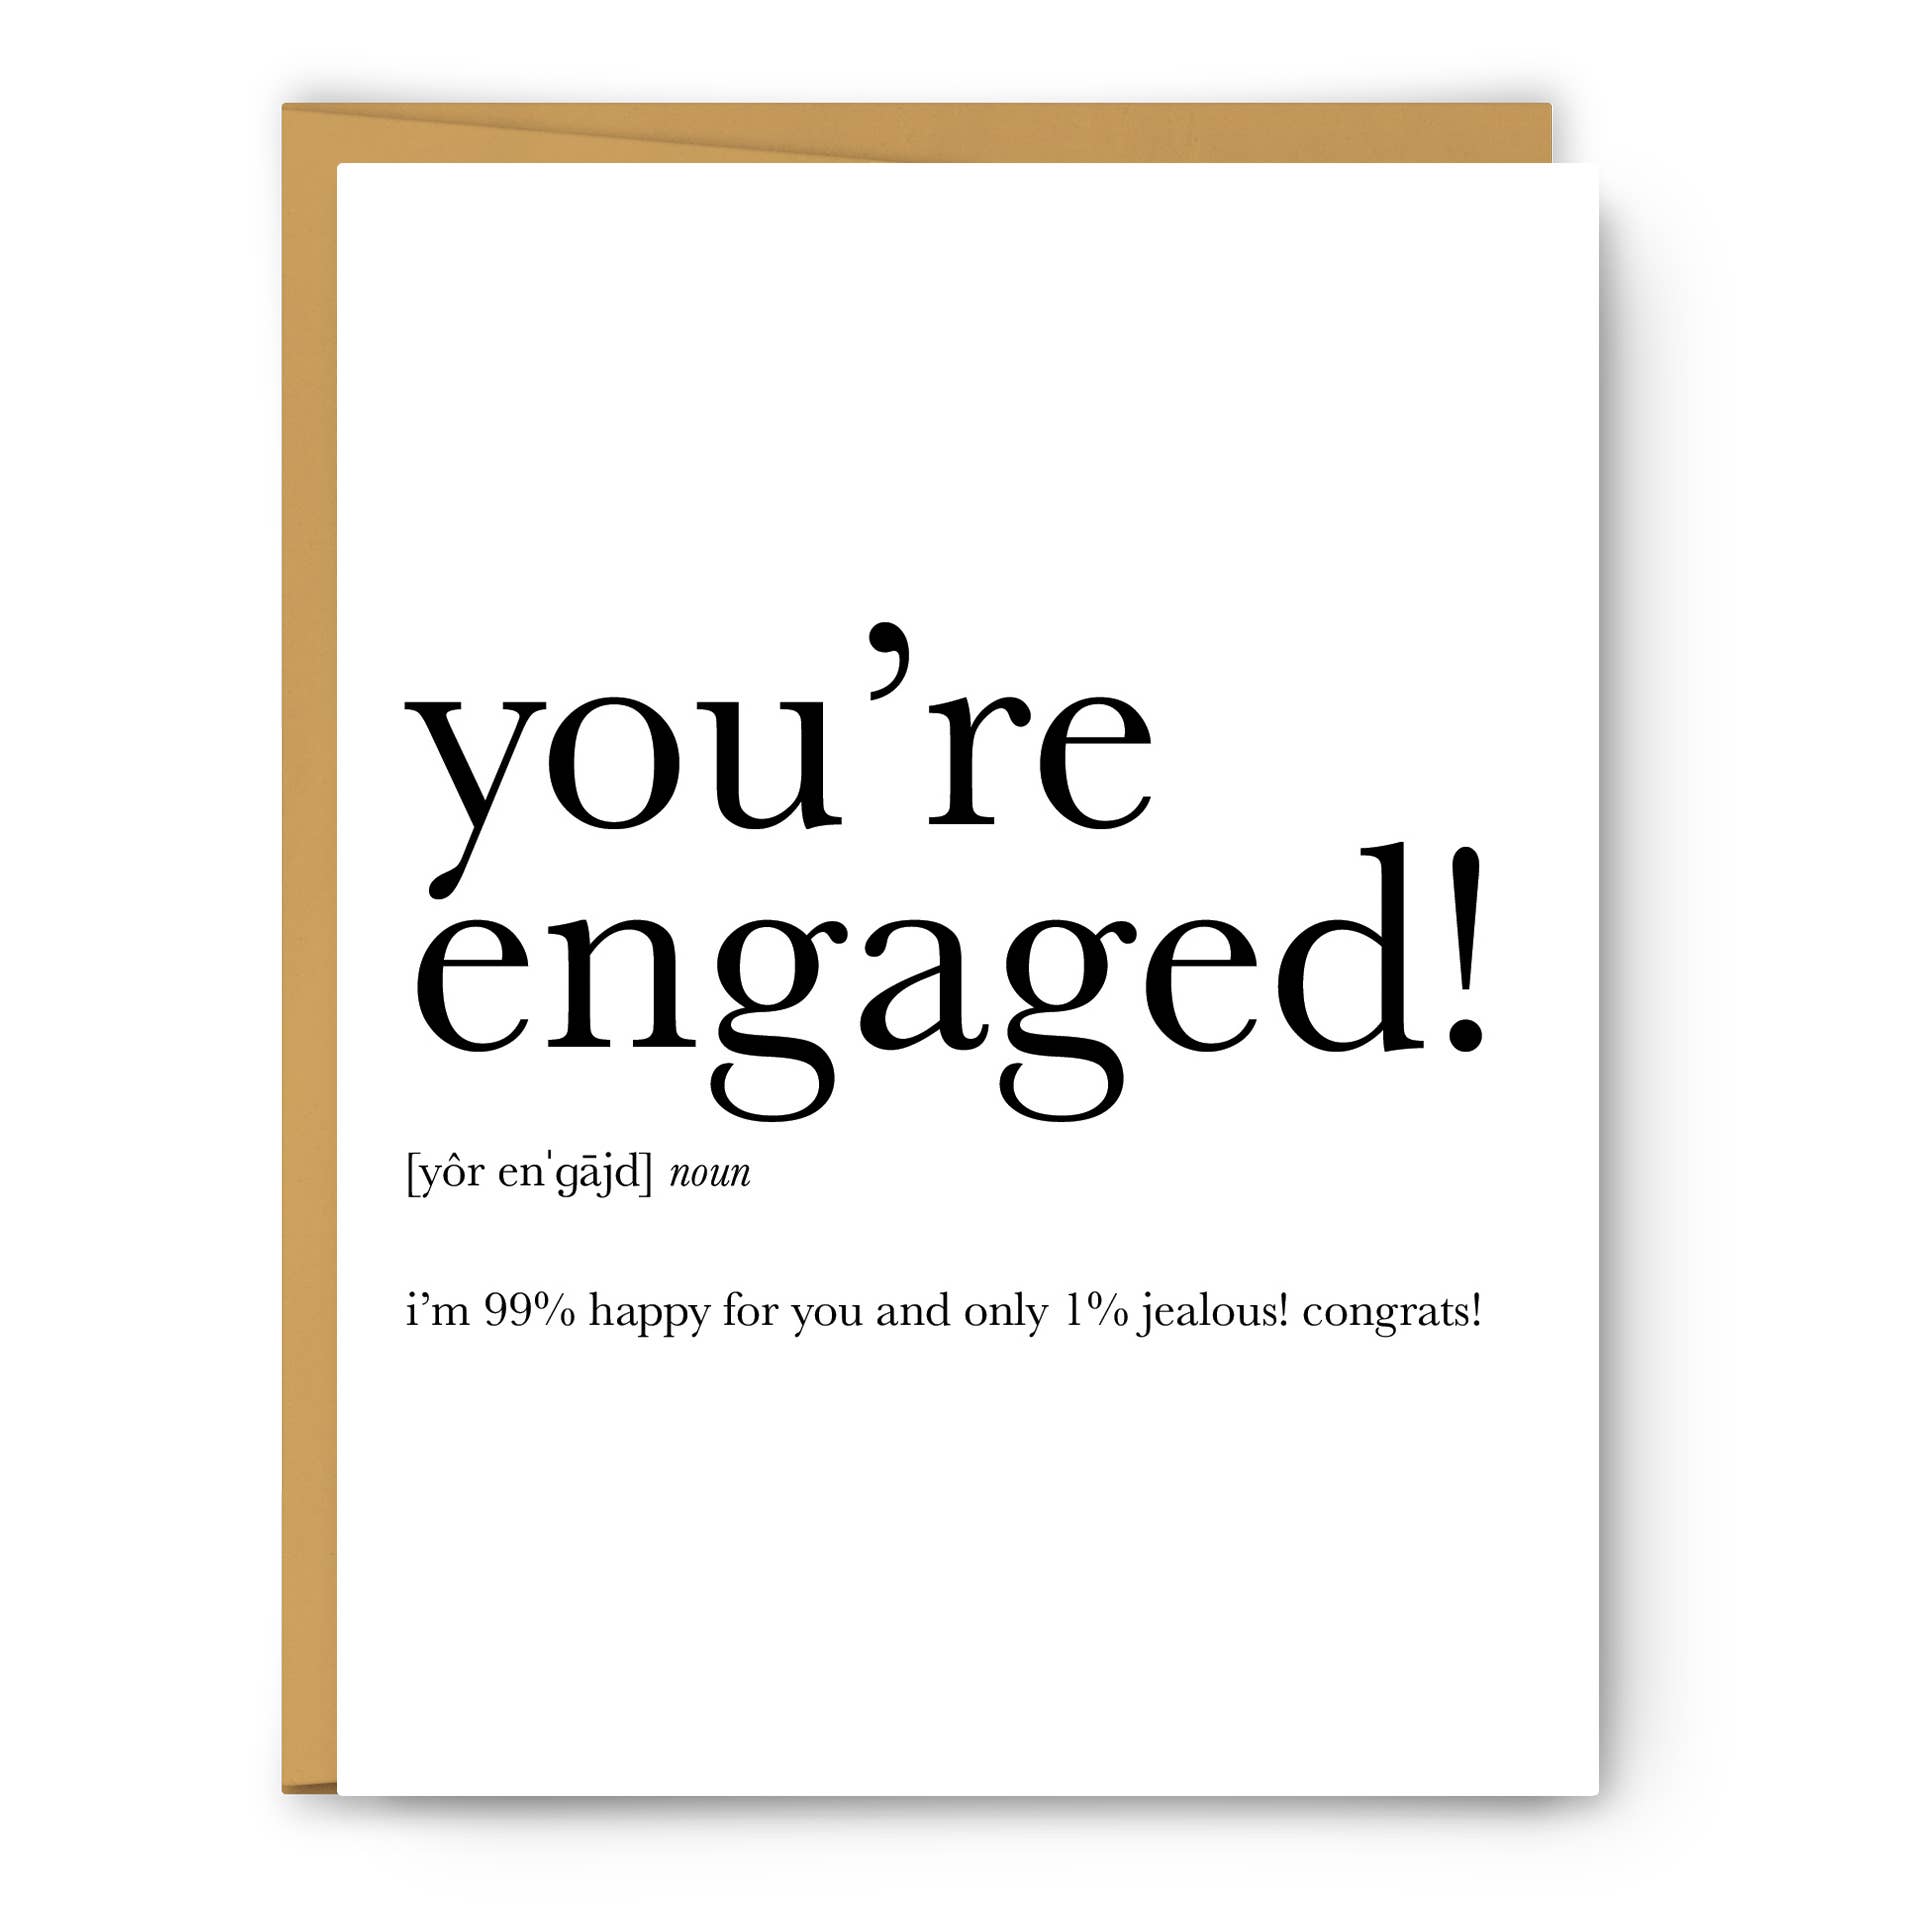 You're Engaged! (1% jealous) - Engagement & Wedding Card